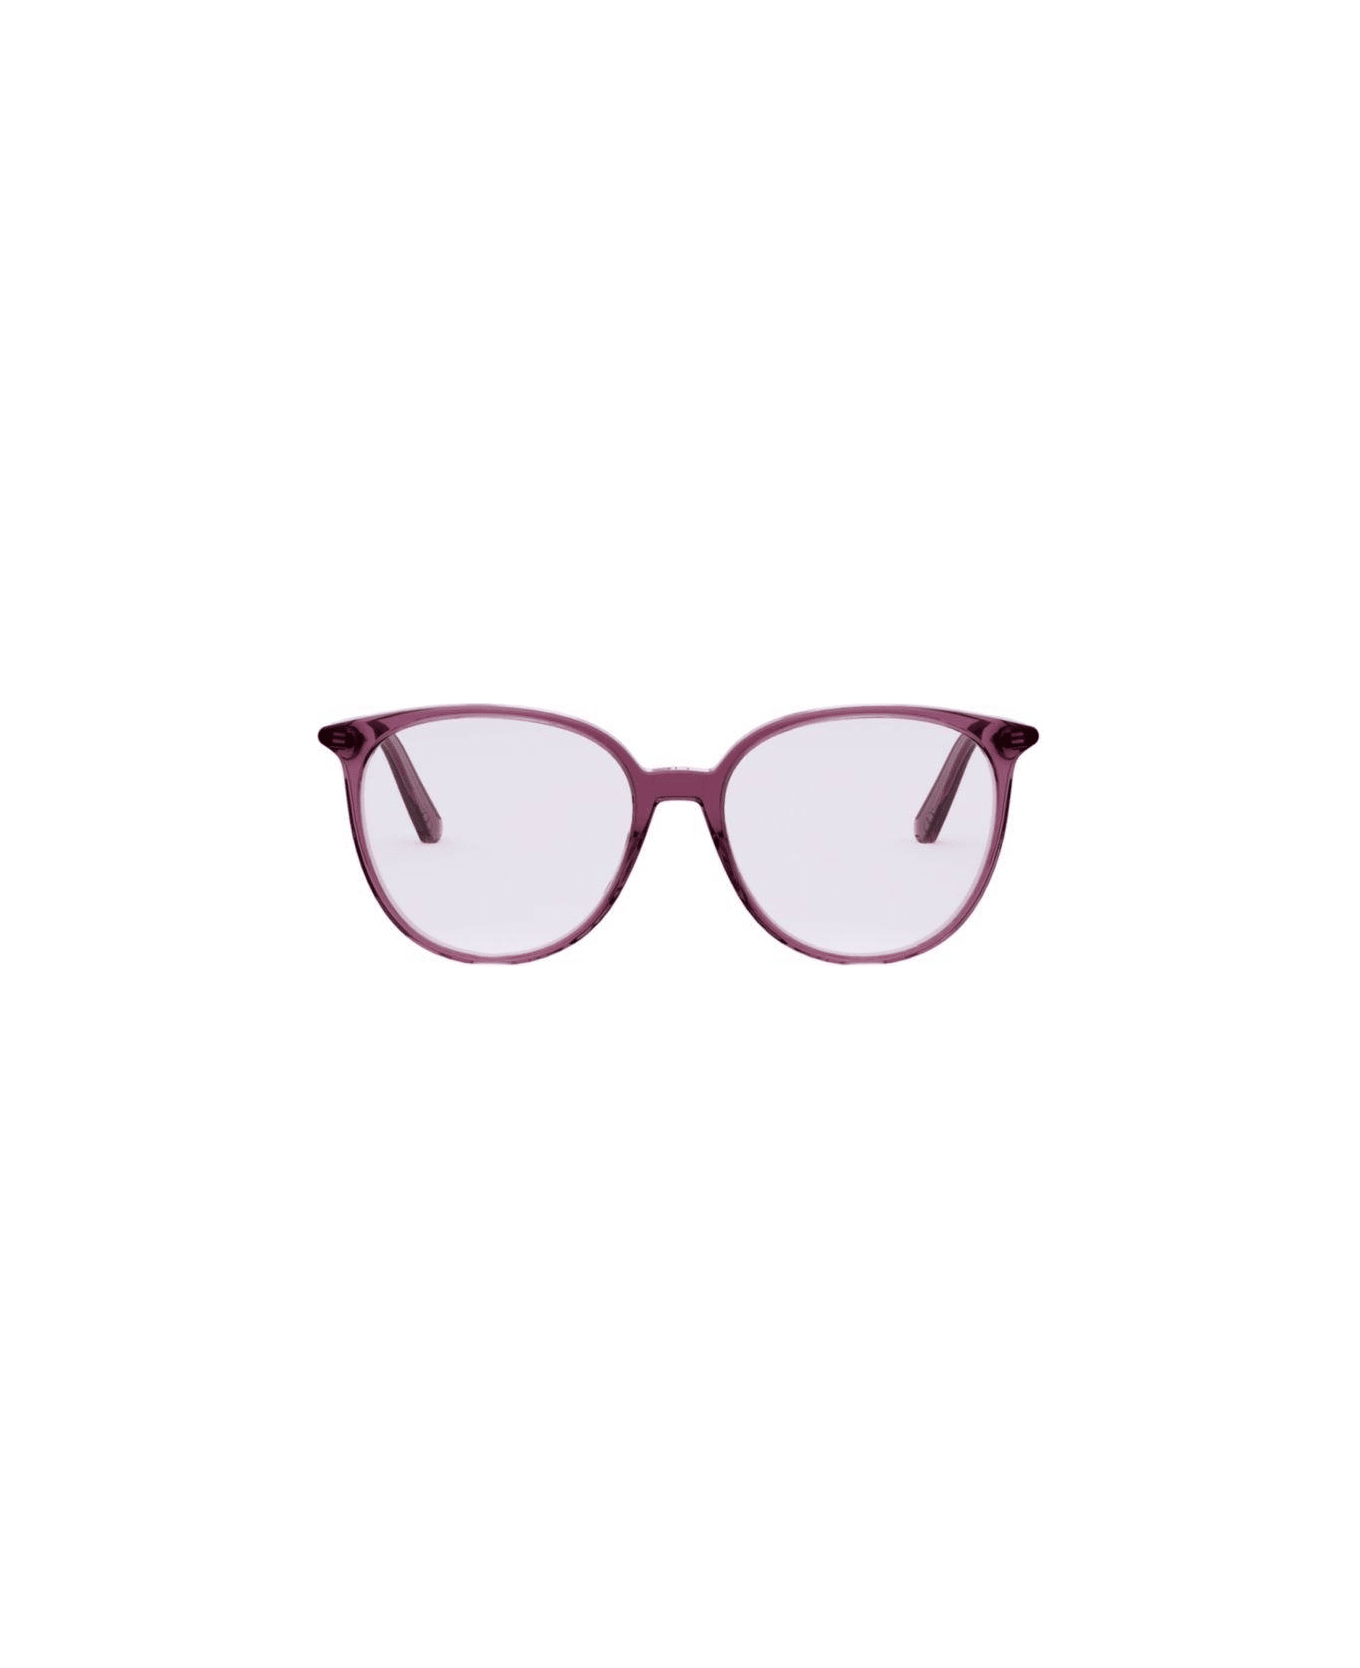 Dior Eyewear Round Frame Glasses - 3600